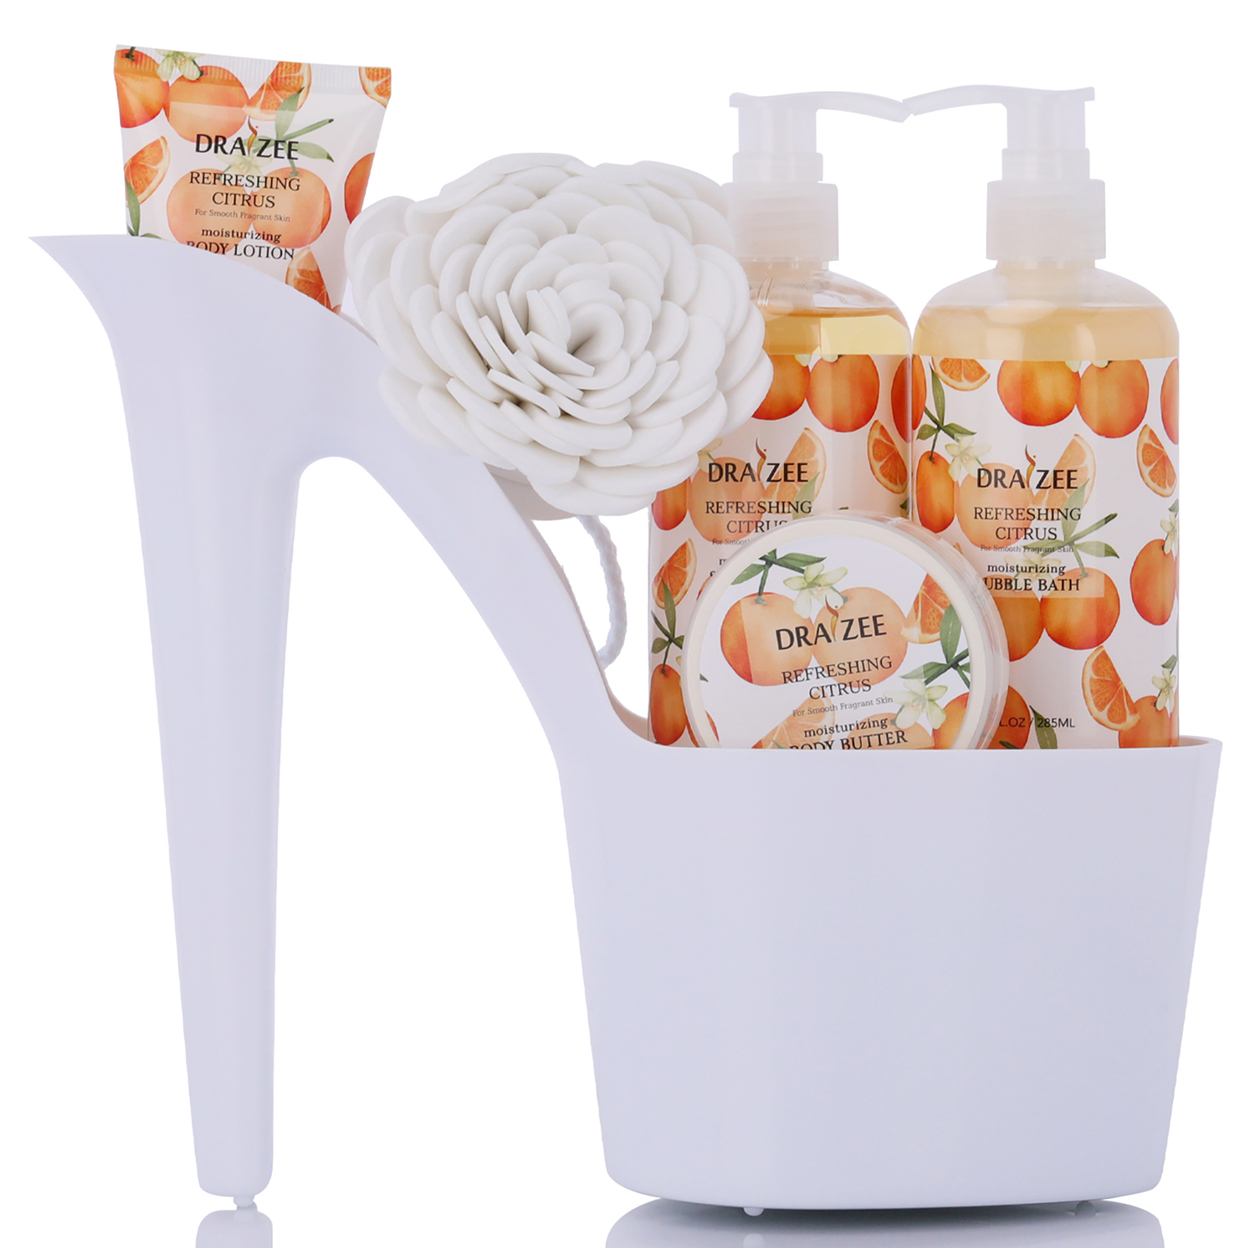 Draizee Heel Shoe Spa Gift Set Citrus Scented Bath Essentials Gift Basket W Shower Gel, Bubble Bath, Body Butter, Body Lotion & Bath Puff